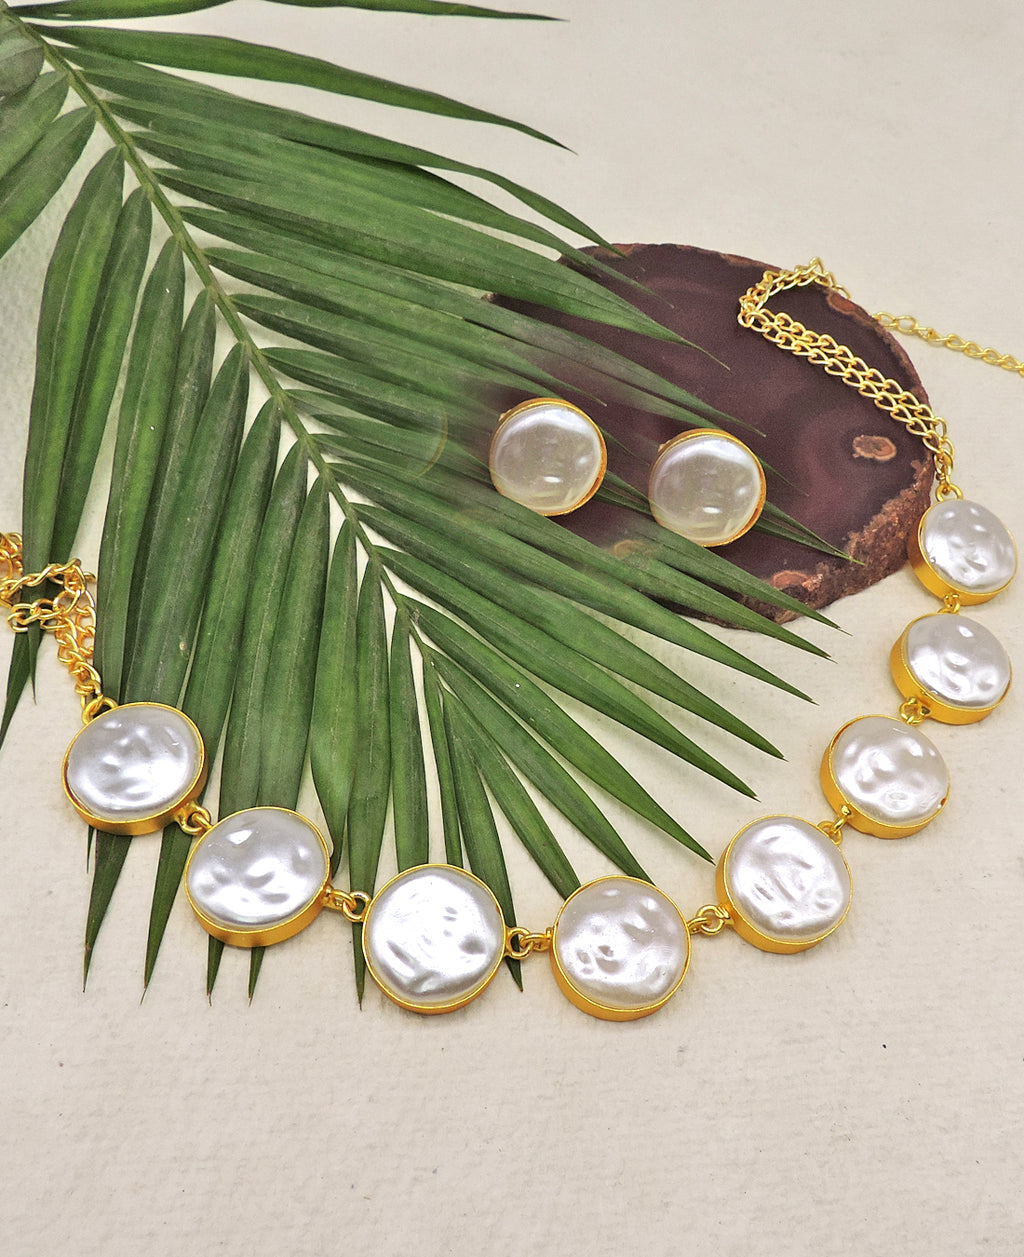 Pearl Earrings (Baroque Pearl) - Statement Earrings - Gold-Plated & Hypoallergenic Jewellery - Made in India - Dubai Jewellery - Dori